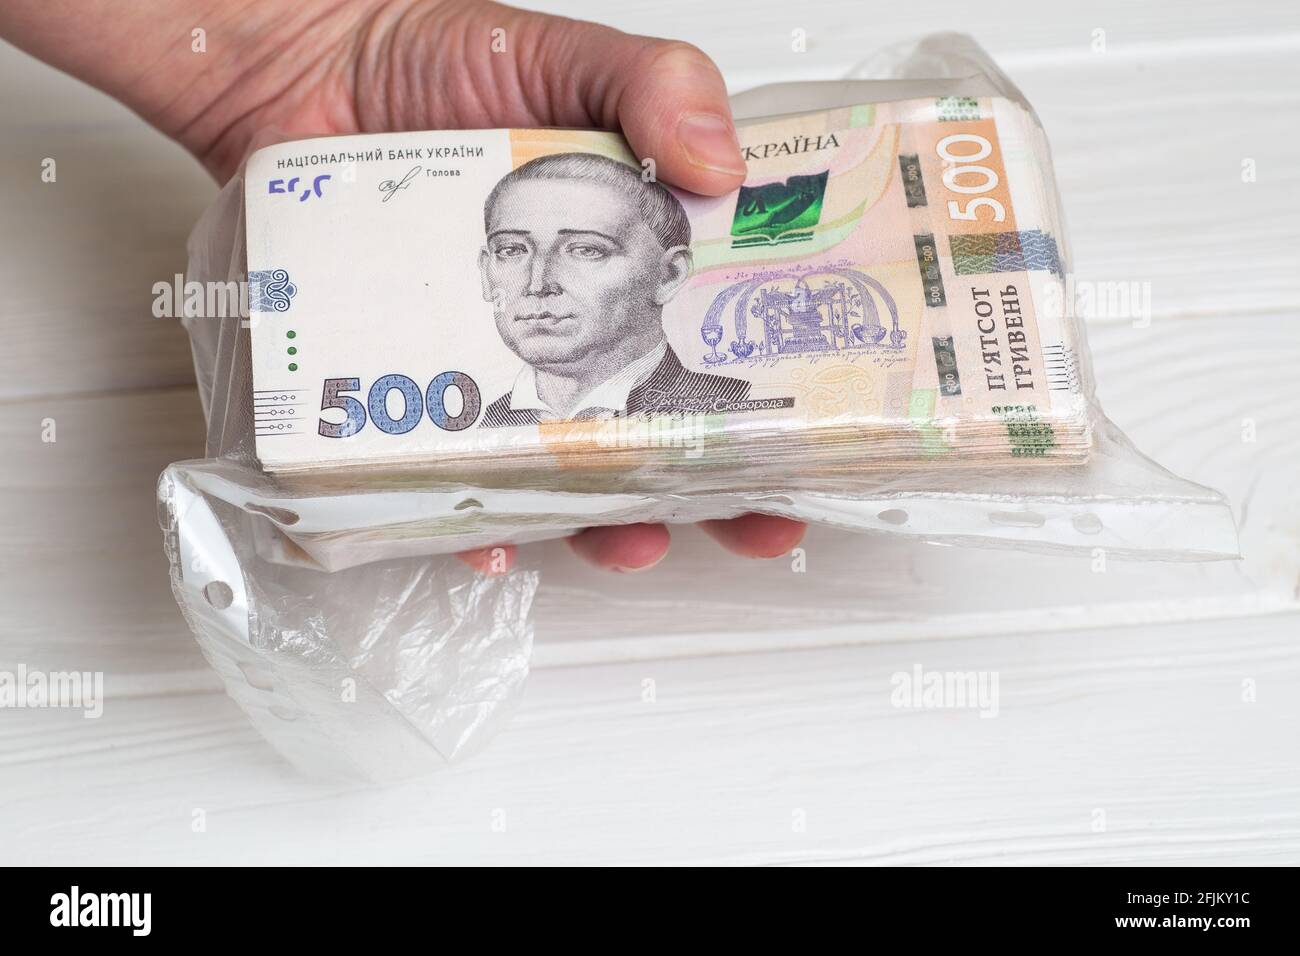 Money of Ukraine. Stack of ukrainian hryvnia banknotes in plastic transparent bag in hands Stock Photo